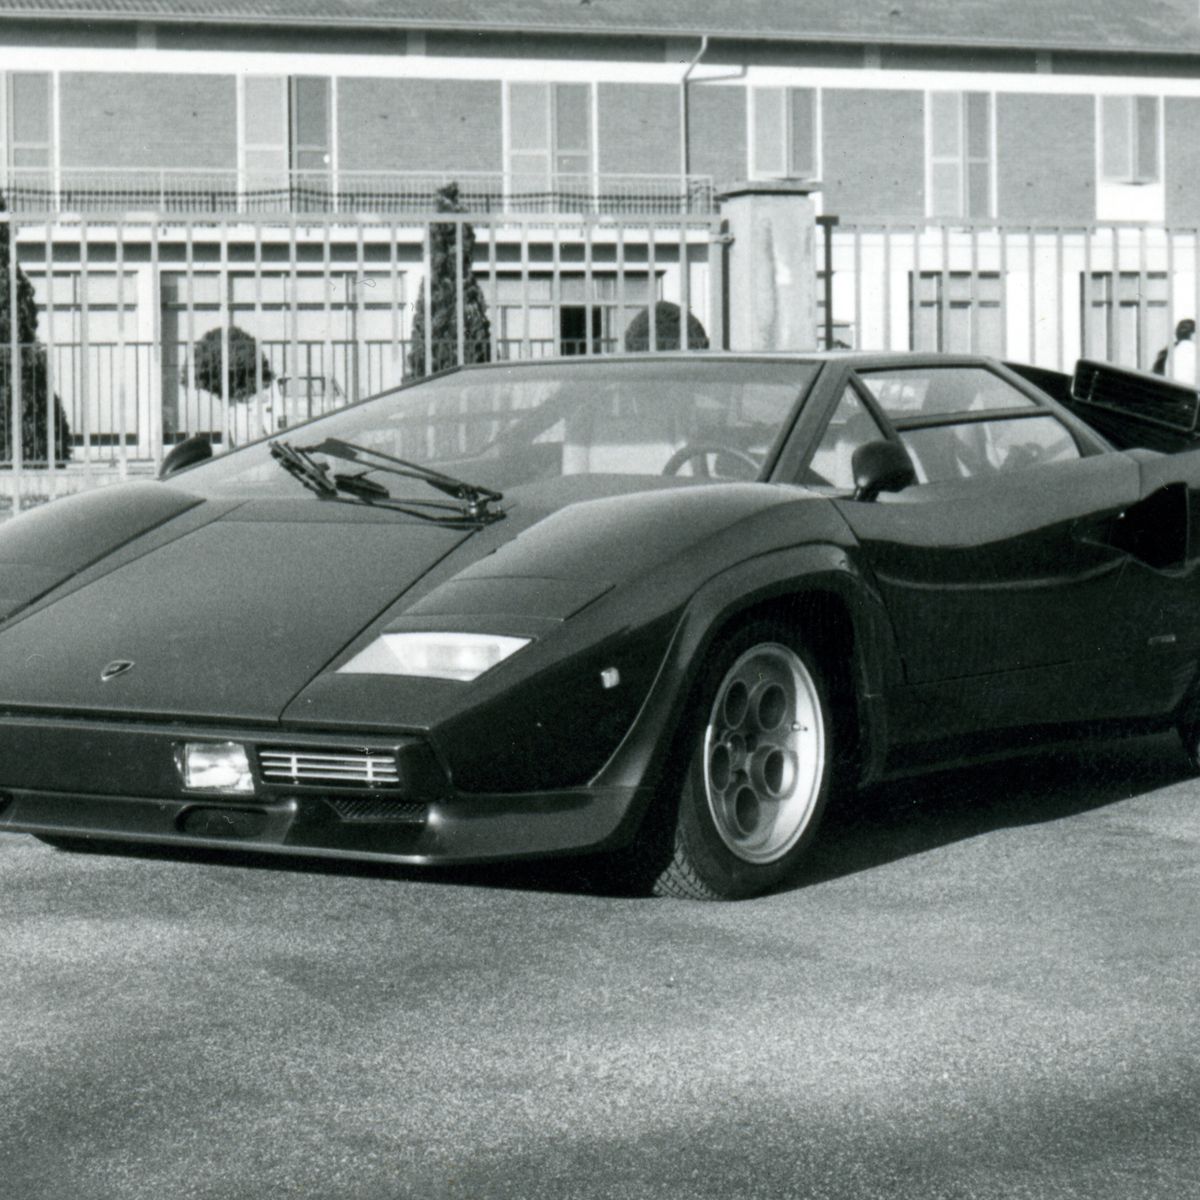 Lamborghini Countach Name Origin - What Does the Name Mean?